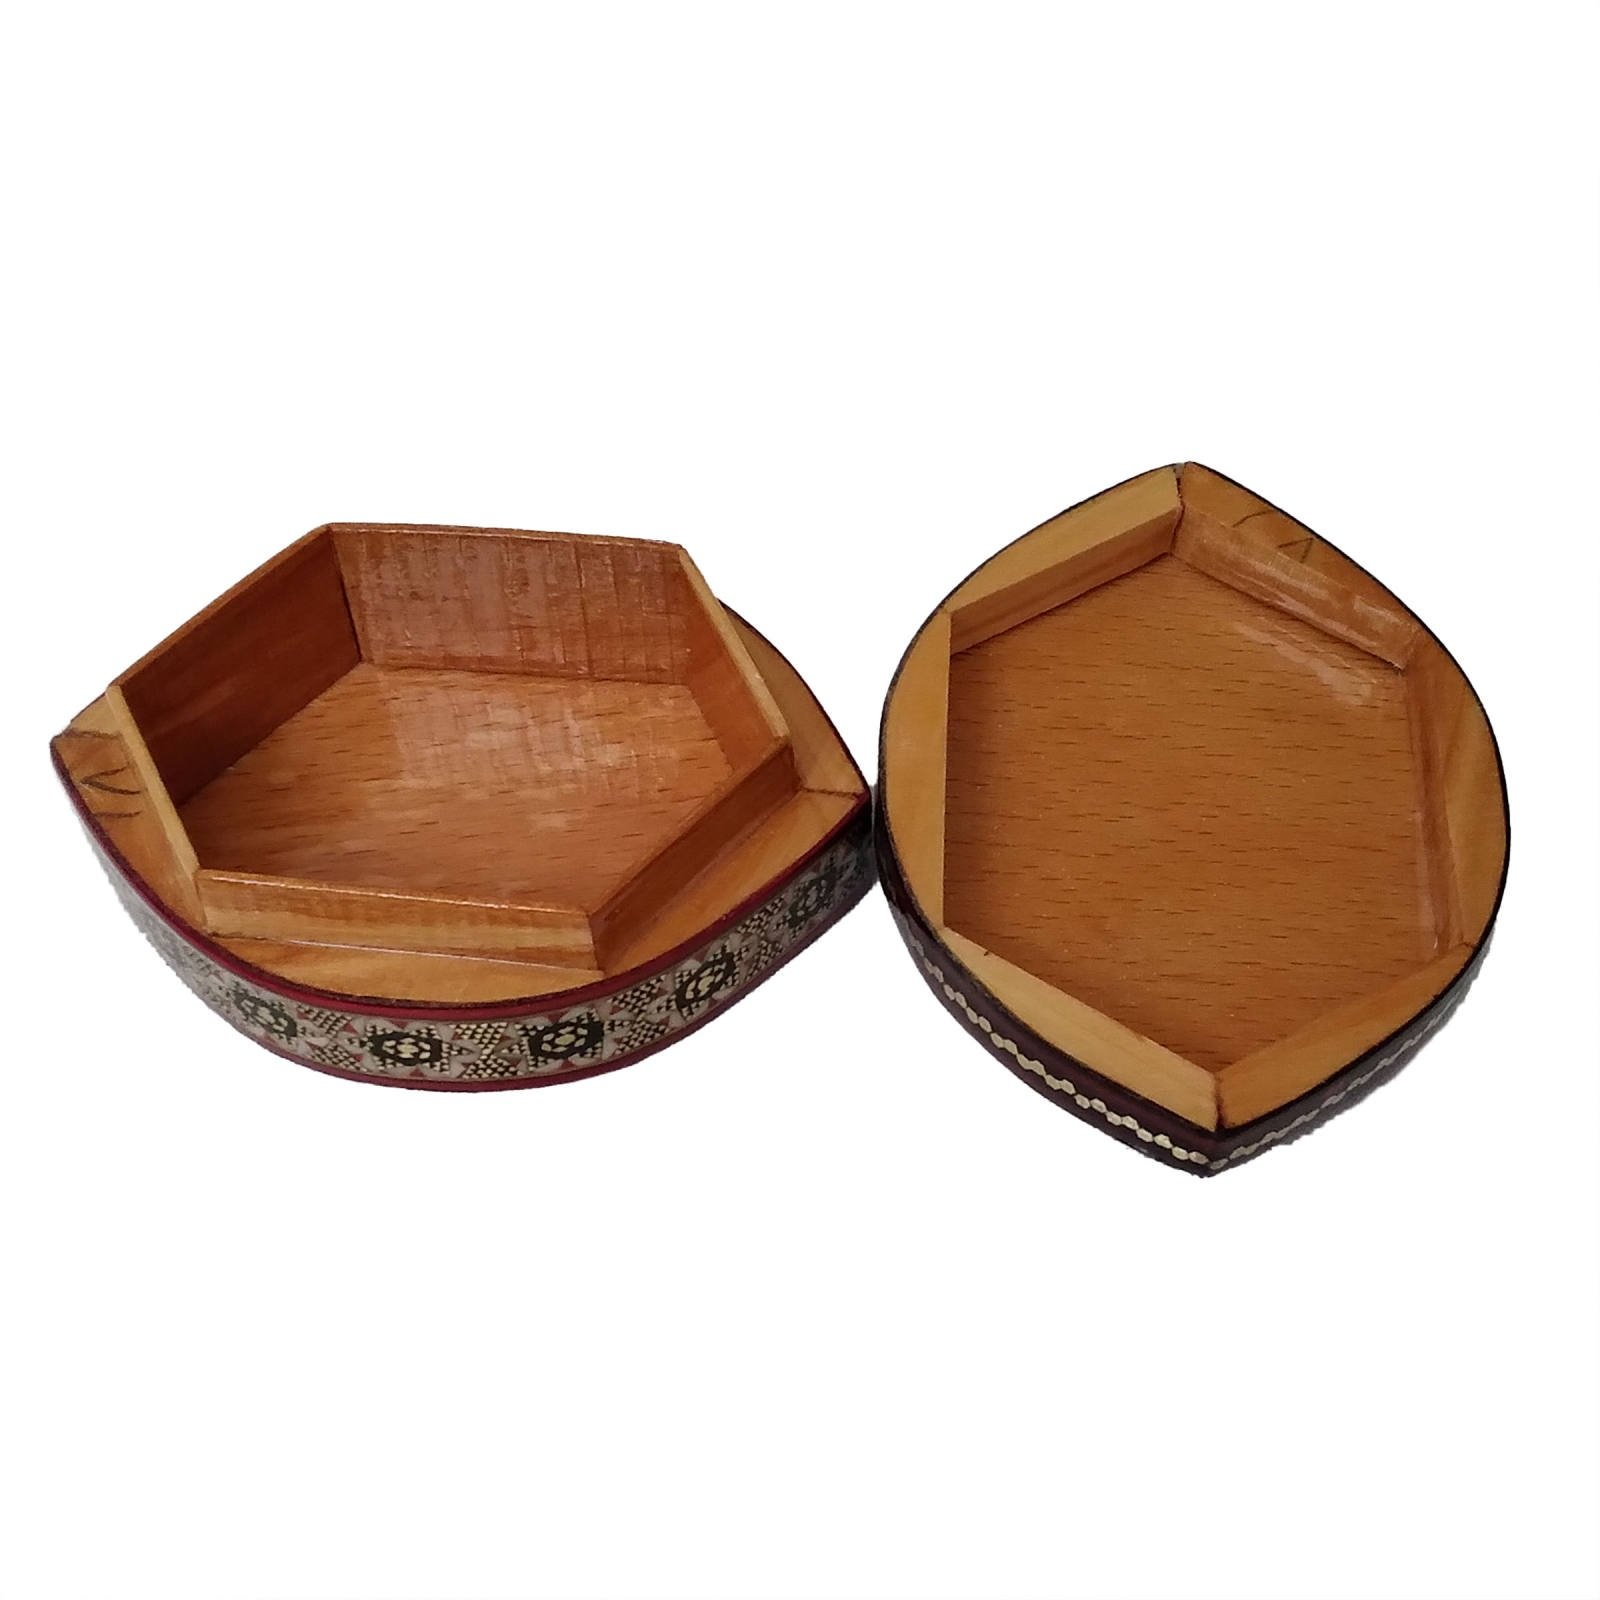 Khatam Jewelry box Oval model Eslimi code 22 , Khatam box, Inlaid, Khatam Jewelry box, Khatam